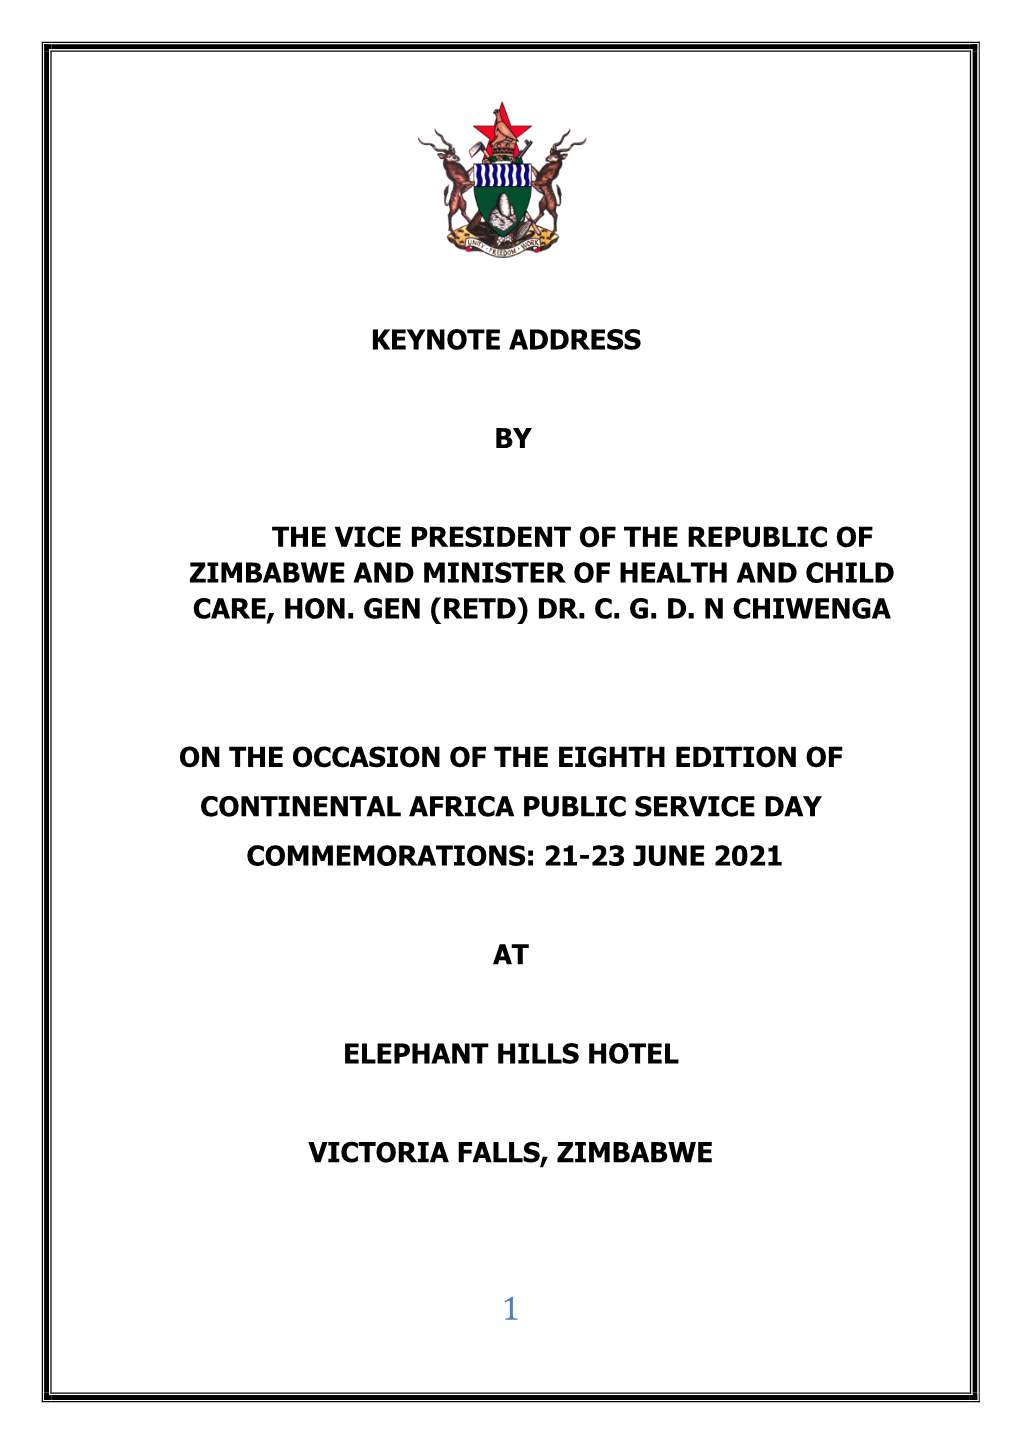 Speech of the Vice President of the Republic of Zimbabwe